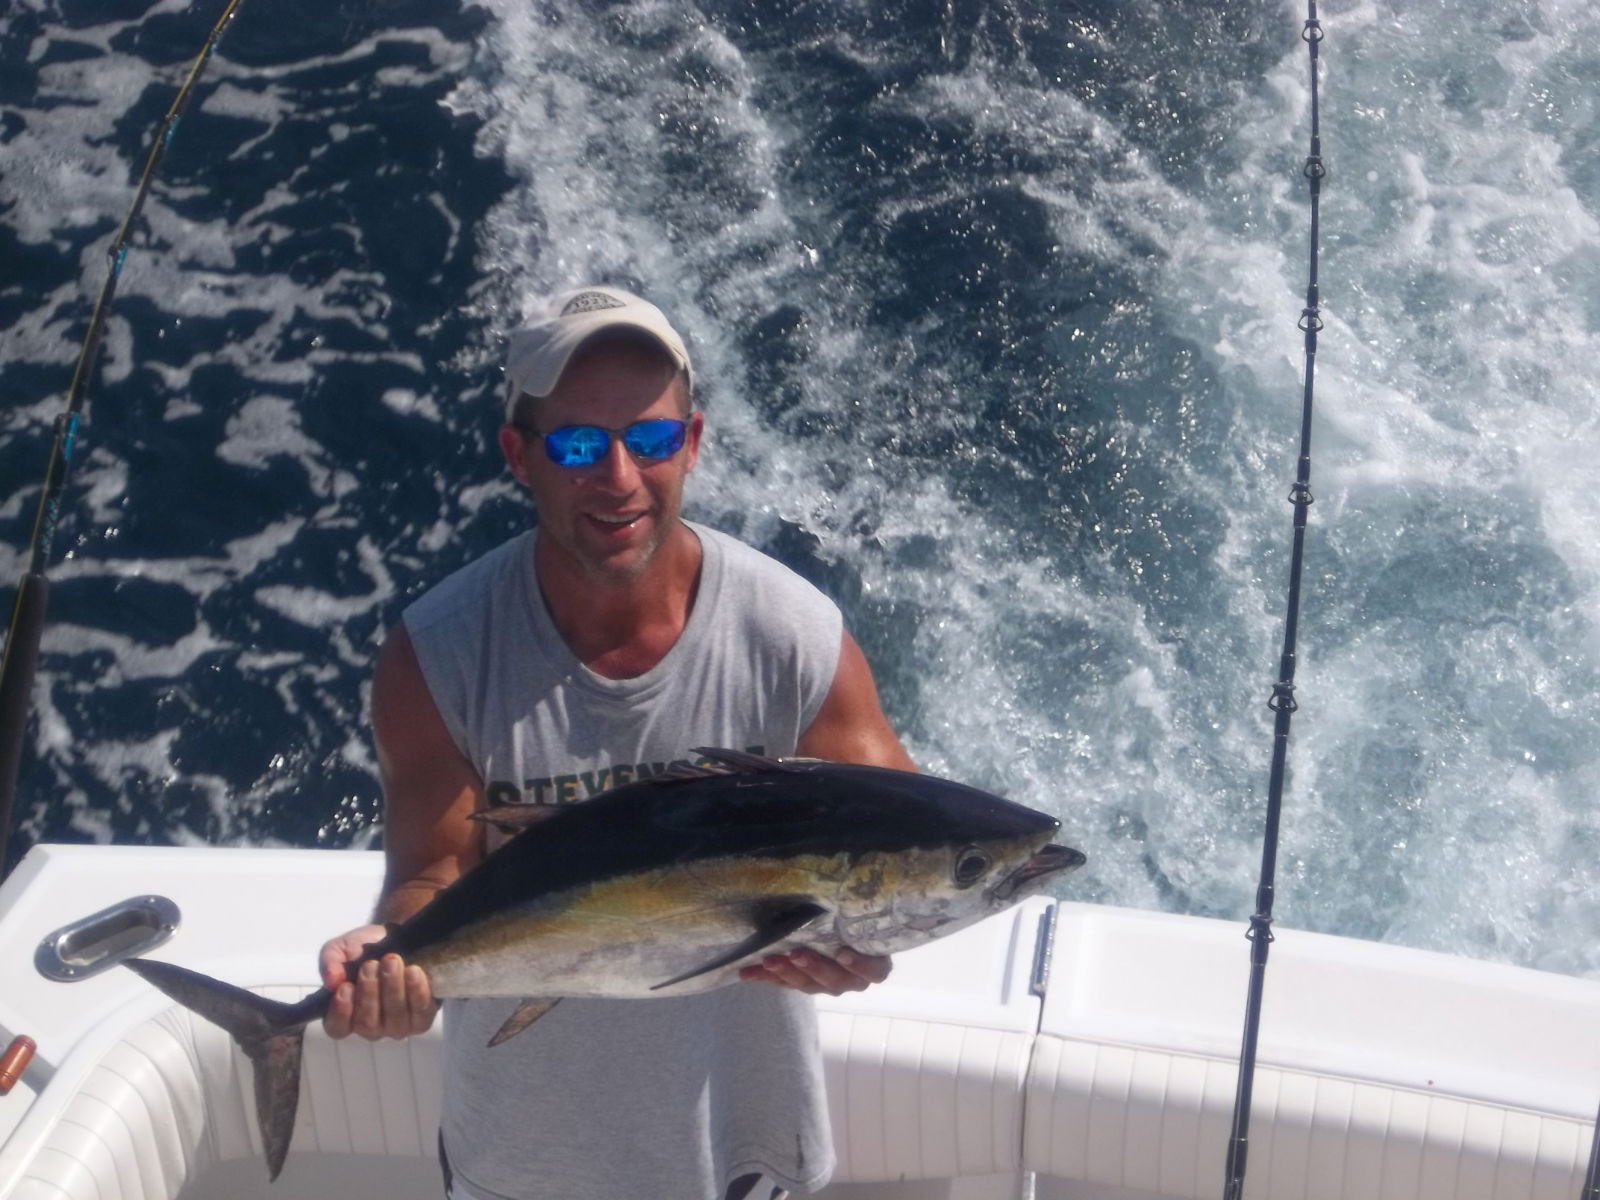 South Florida Fishing